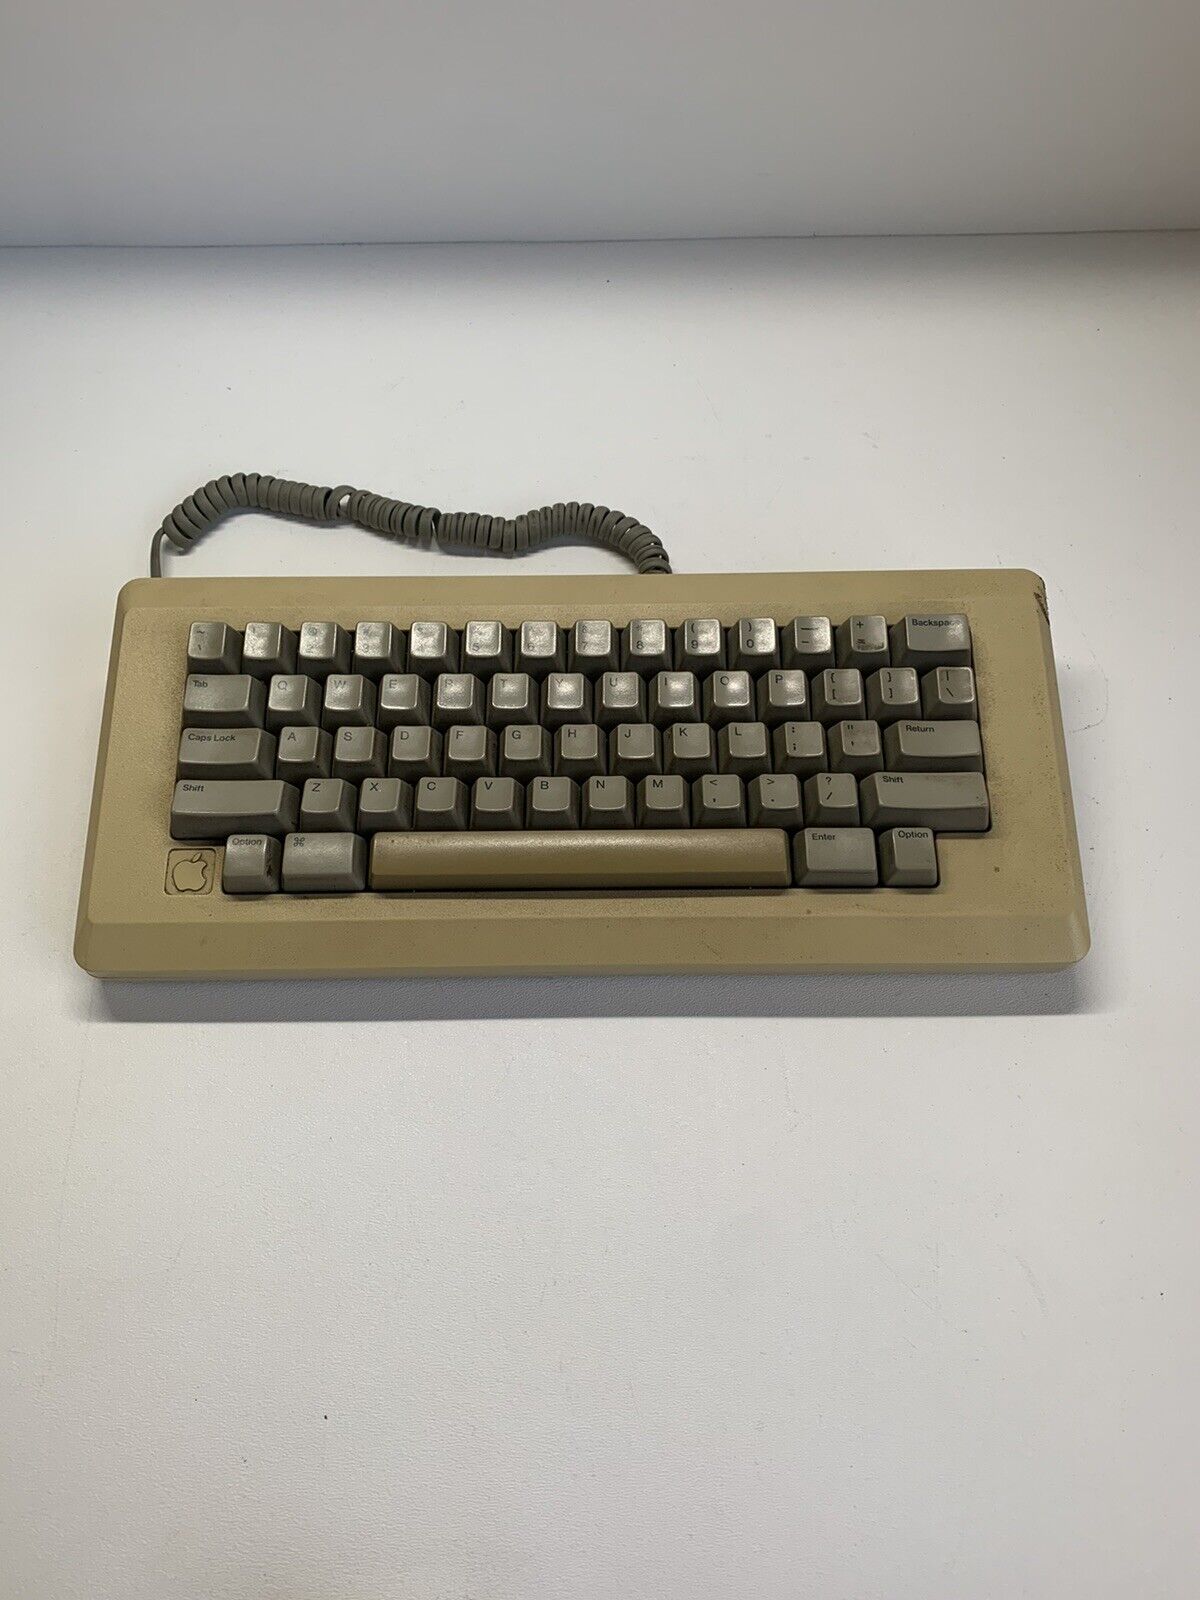 Rare Vintage Apple Macintosh Model M0110 Keyboard *UNTESTED* But Should Work